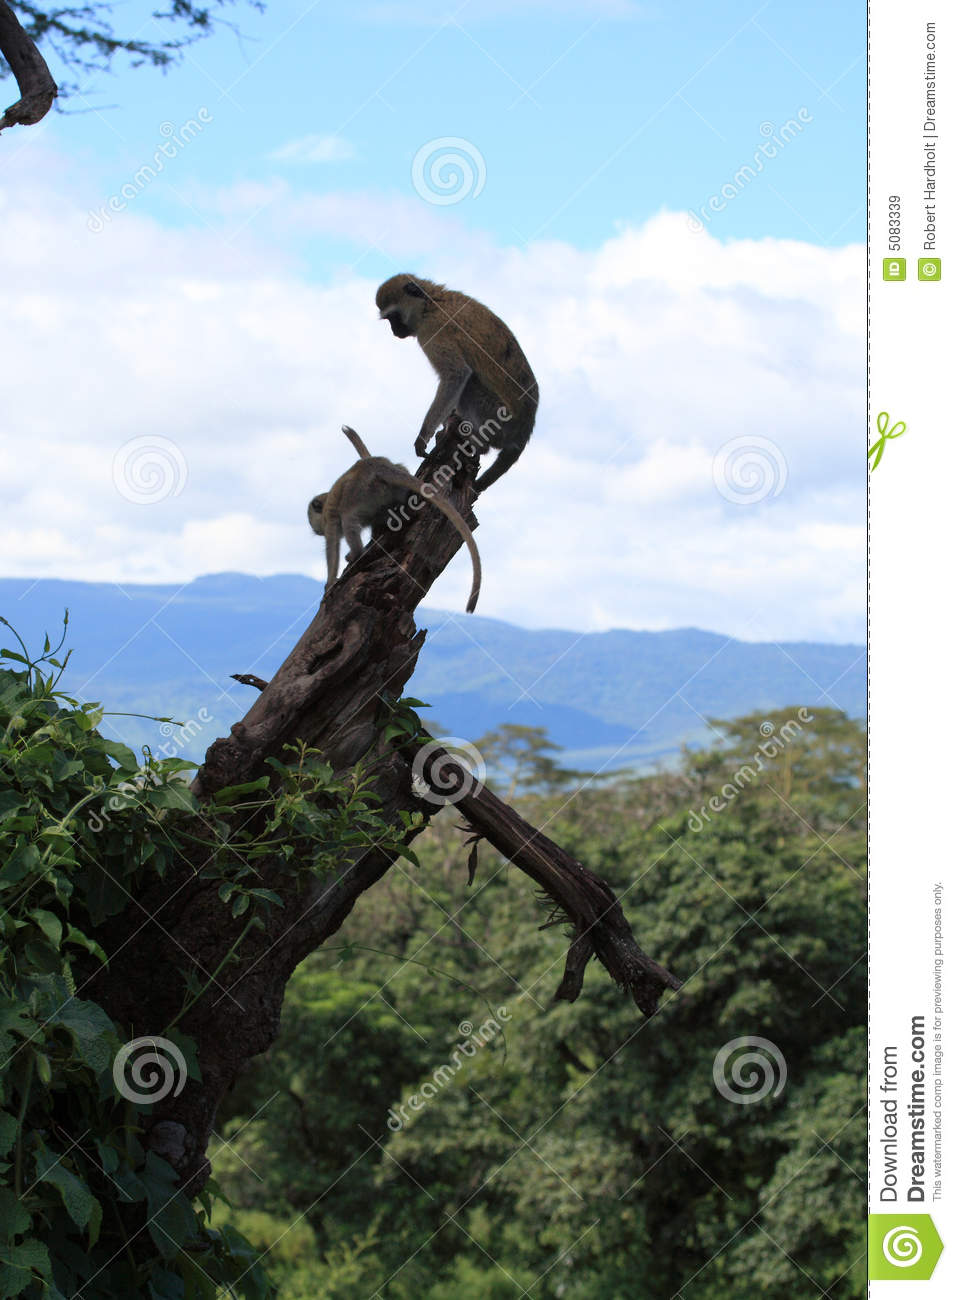 Landscape With Vervet Monkey On Tree Royalty Free Stock Images   Image    